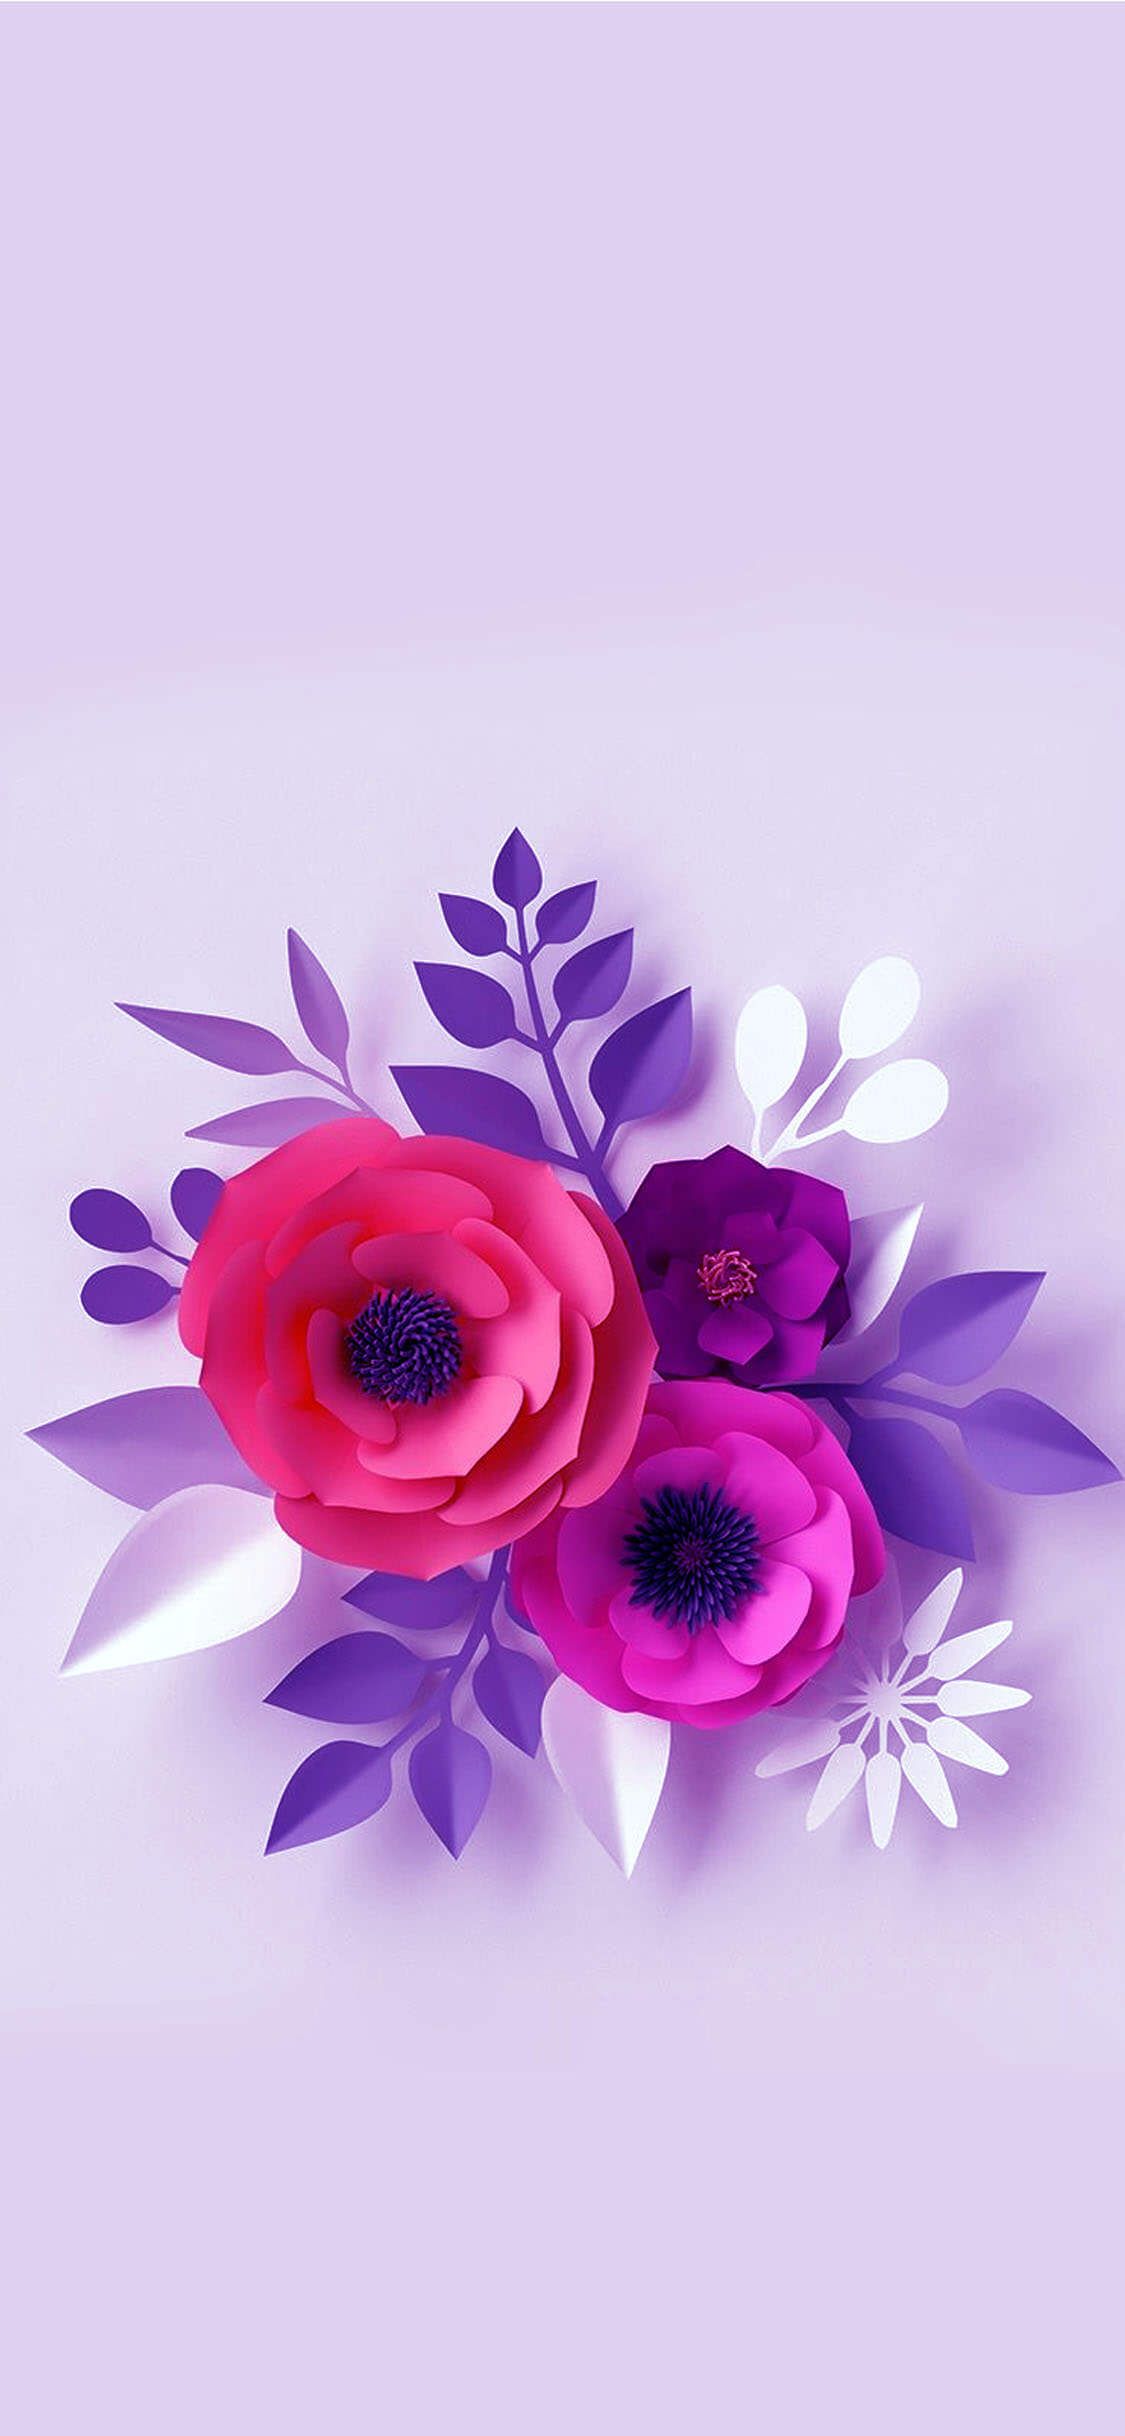 Flower iPhone HD Wallpaper On